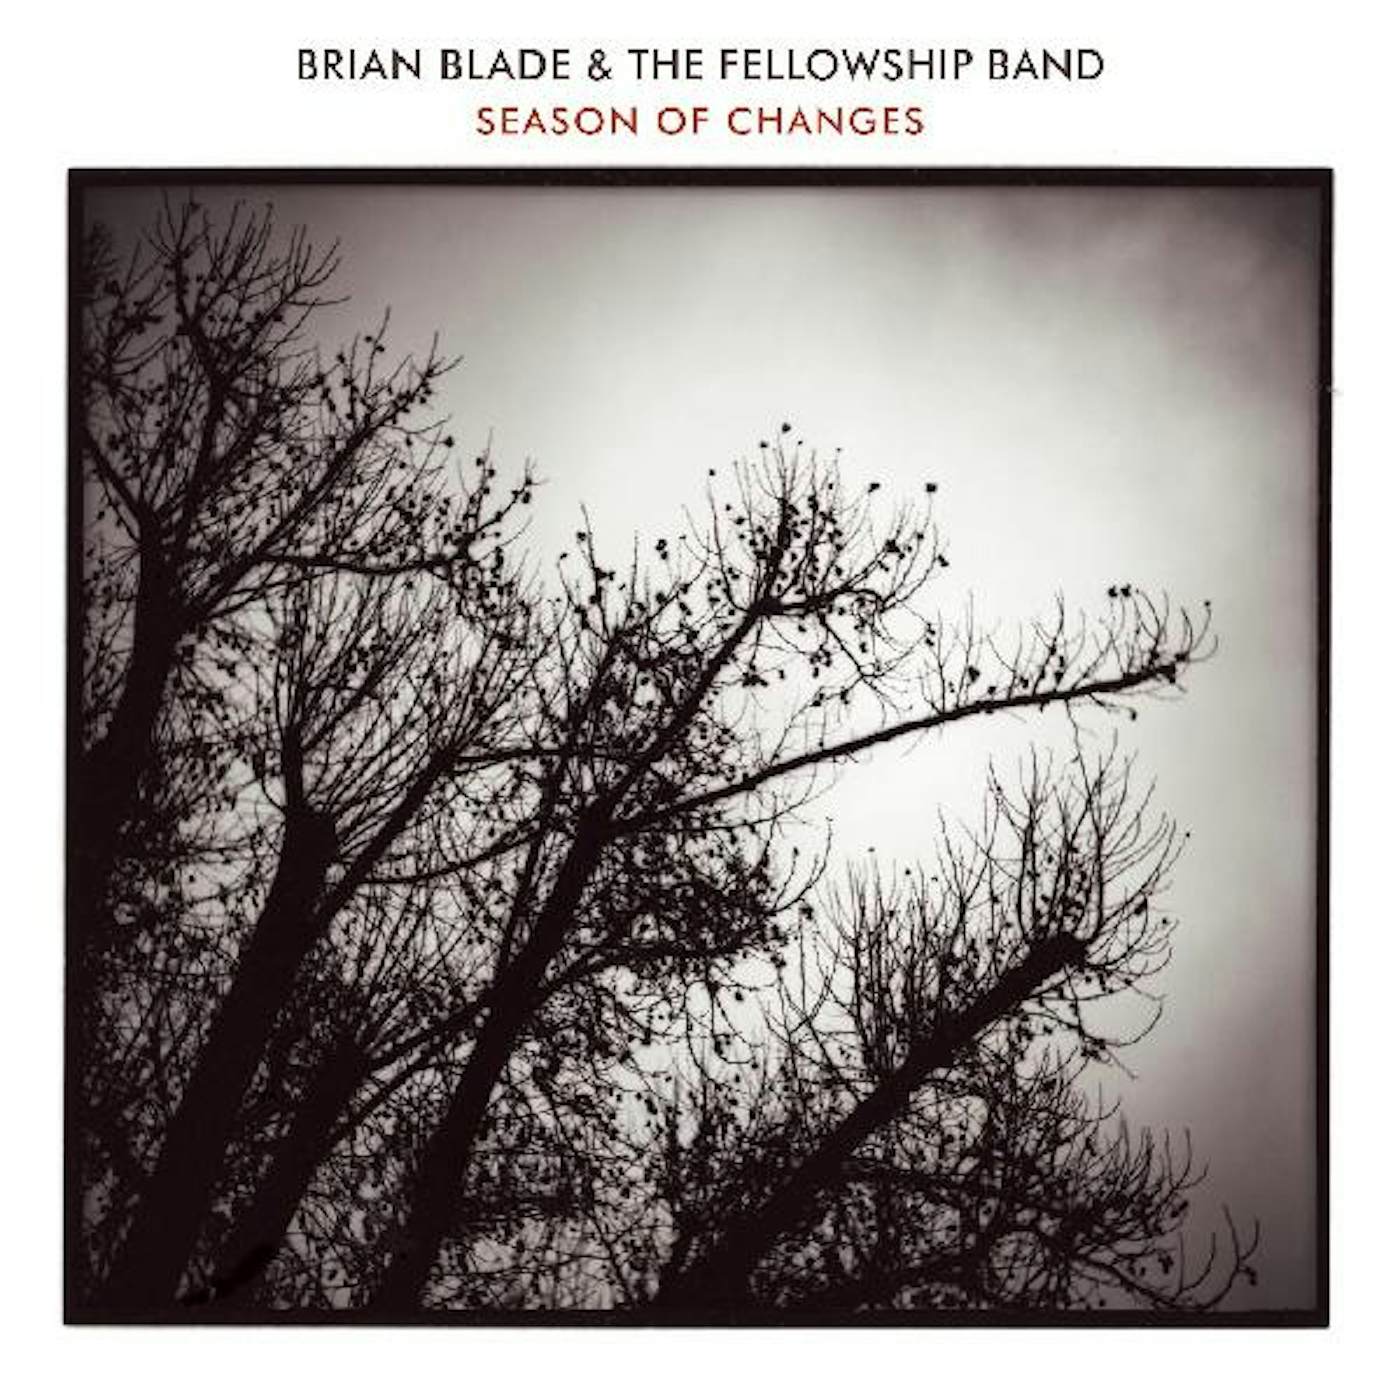 Brian Blade & The Fellowship Band SEASON OF CHANGES CD